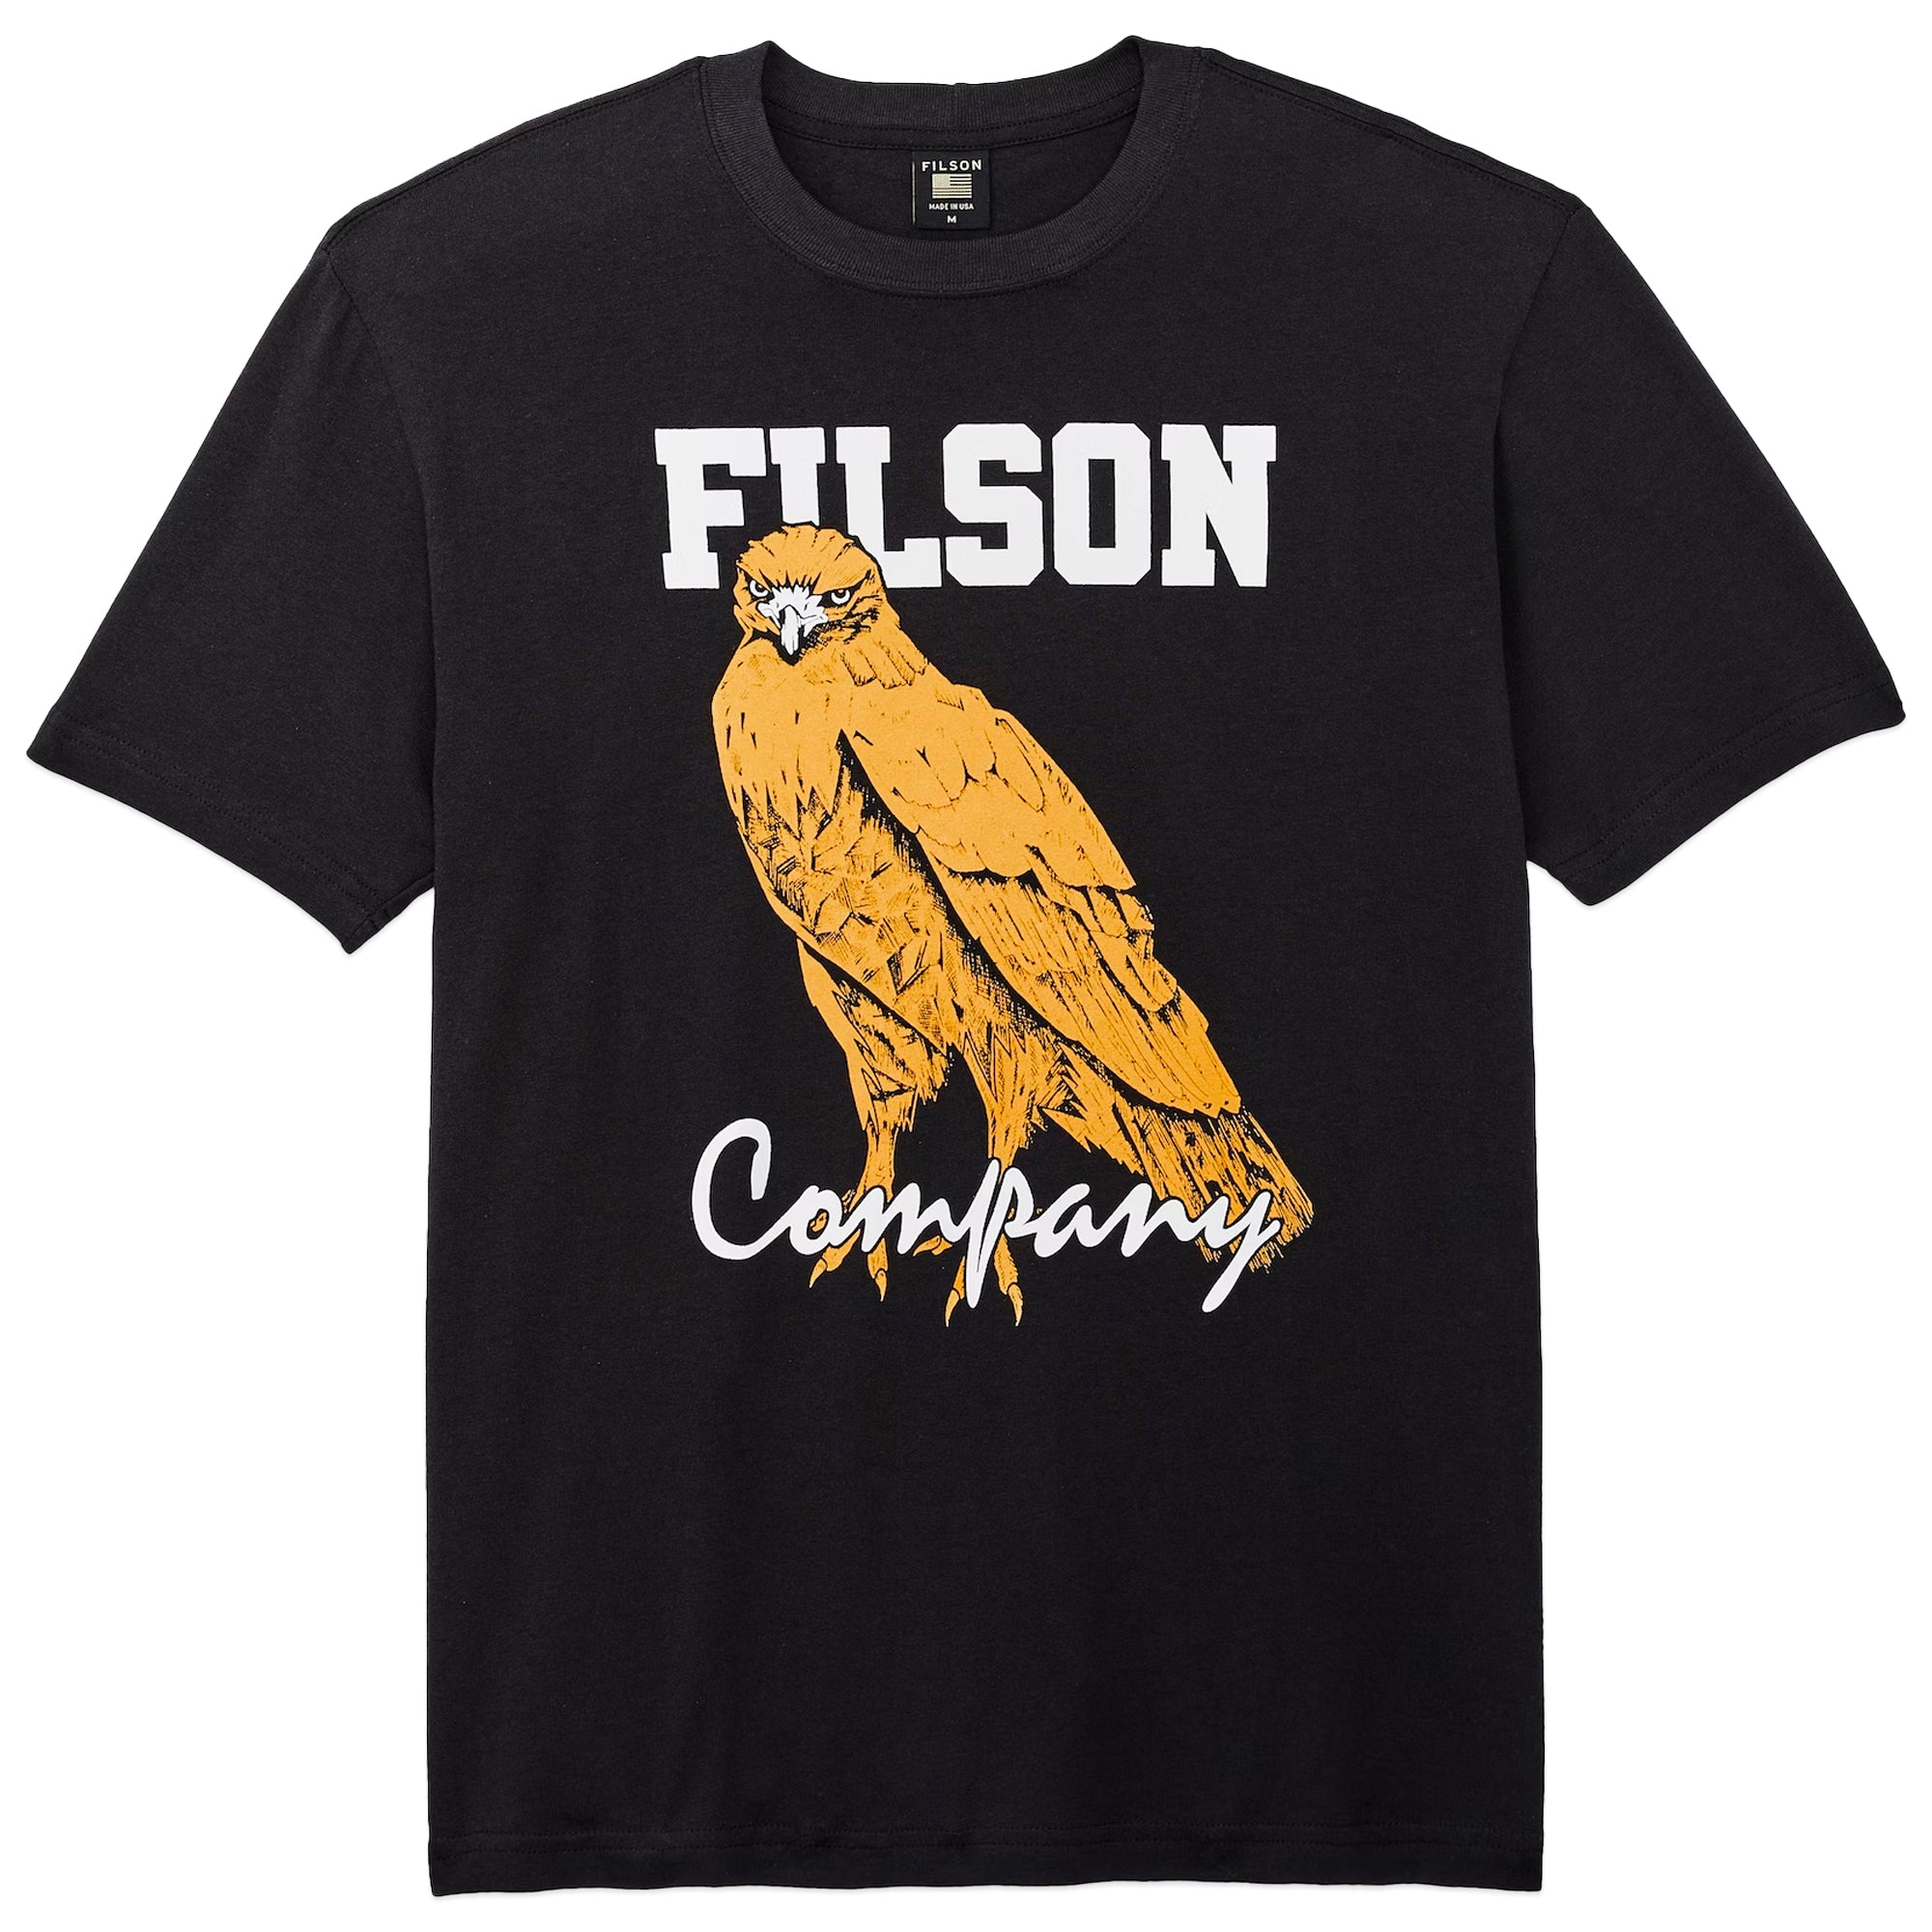 Filson SS Pioneer Graphic T-Shirt - Black / Bird Of Prey